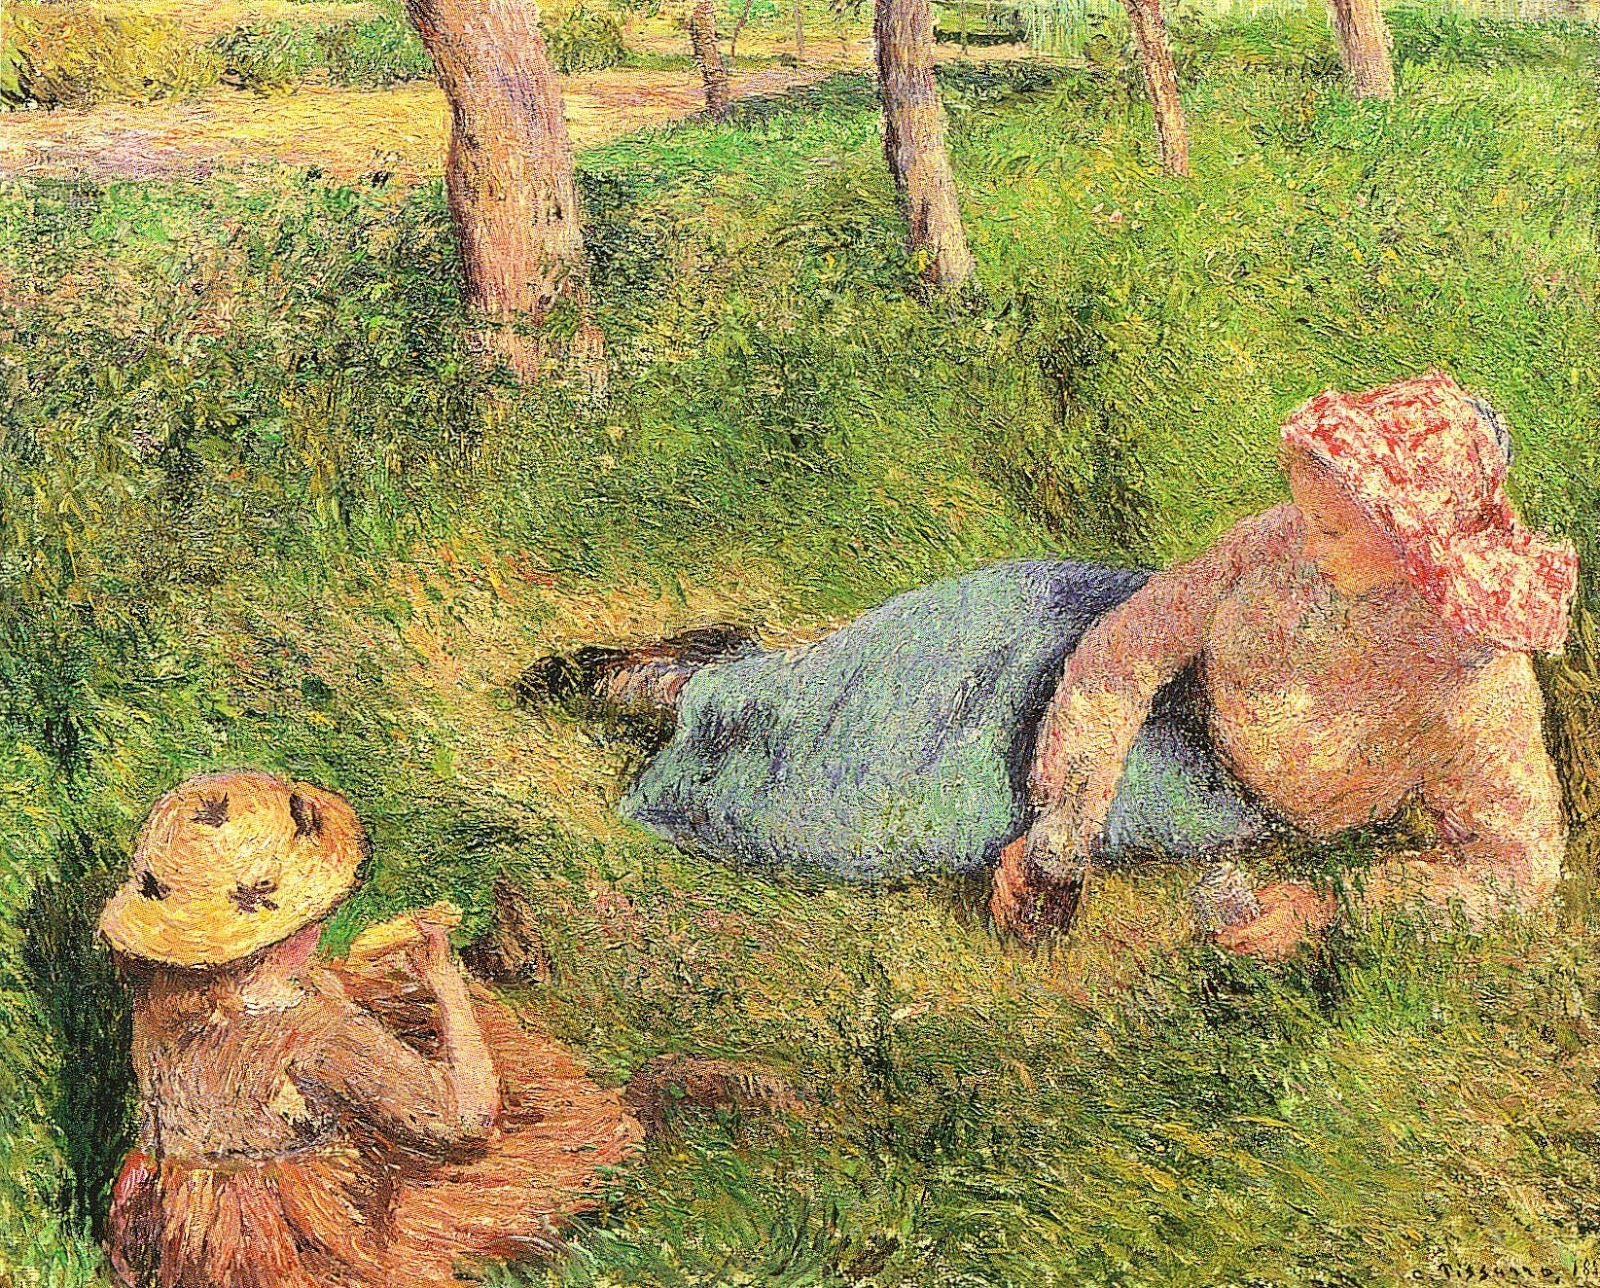 Camille+Pissarro-1830-1903 (259).jpg